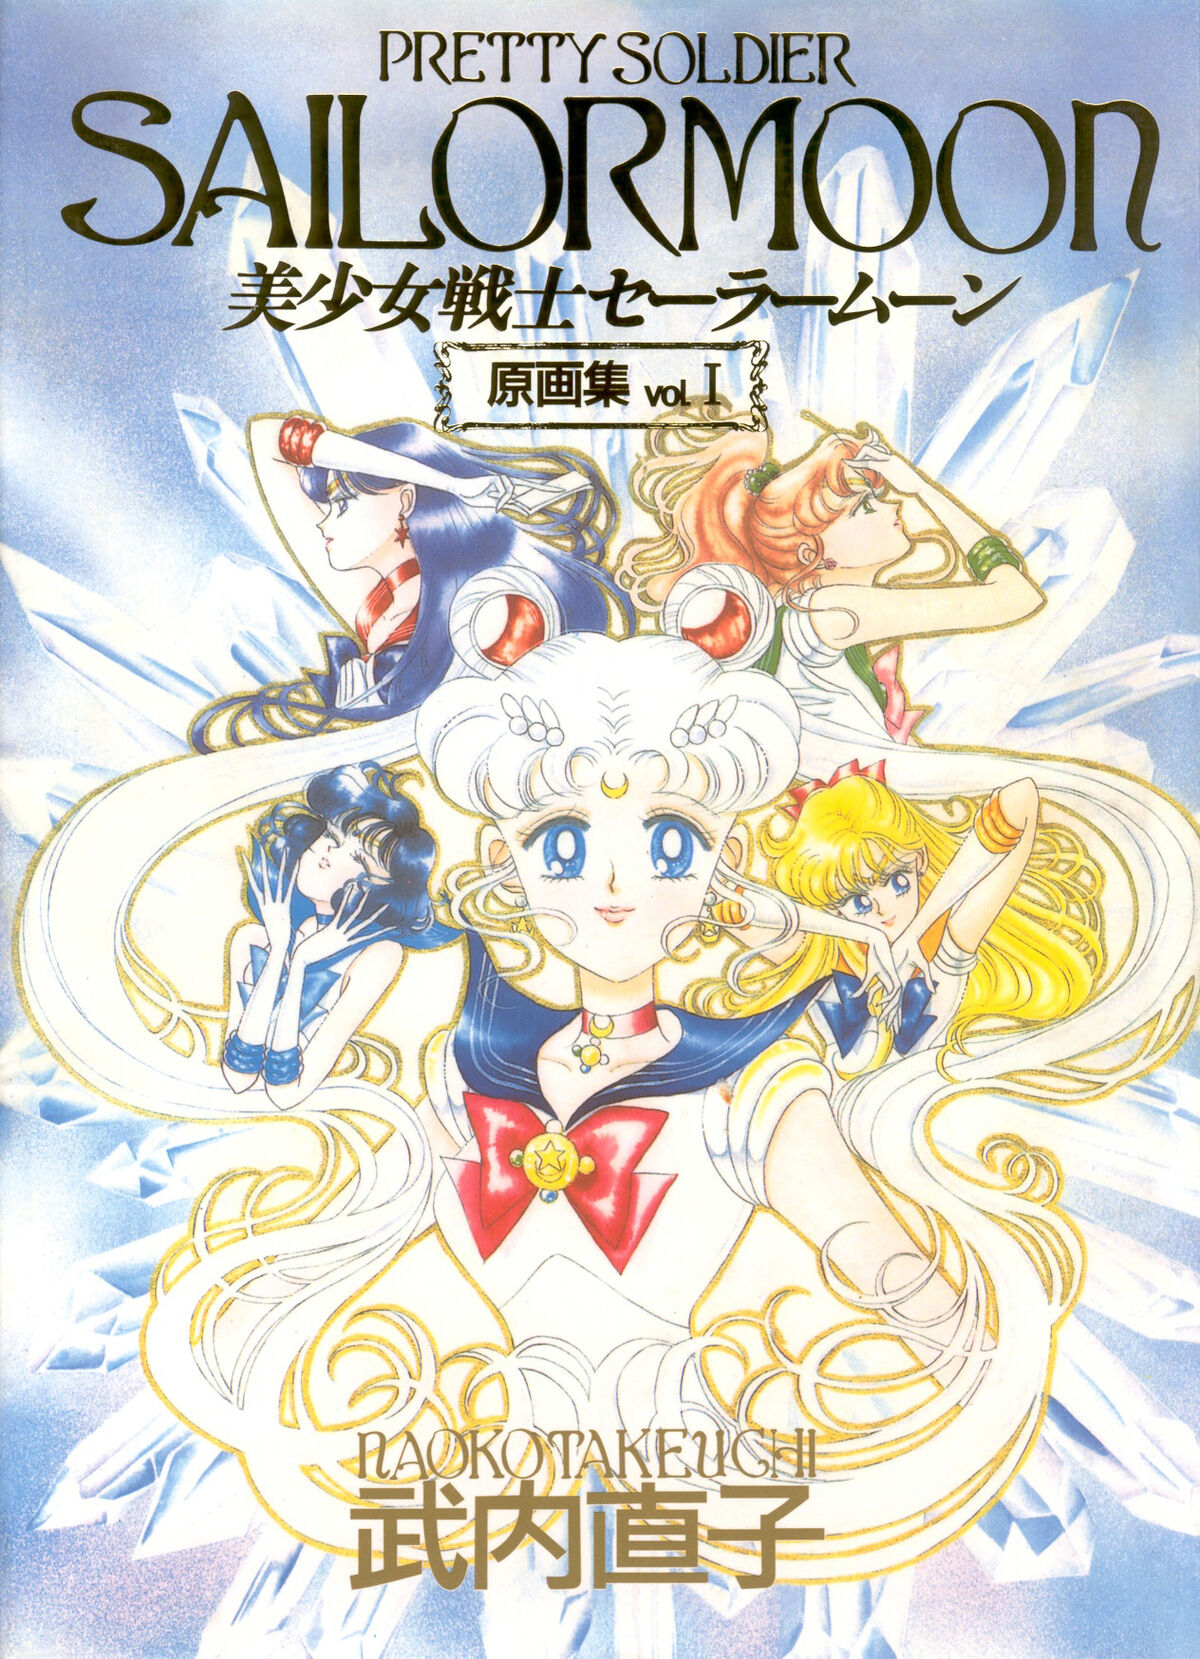 Pretty Soldier Sailor Moon The Original Picture Collection Vol.1